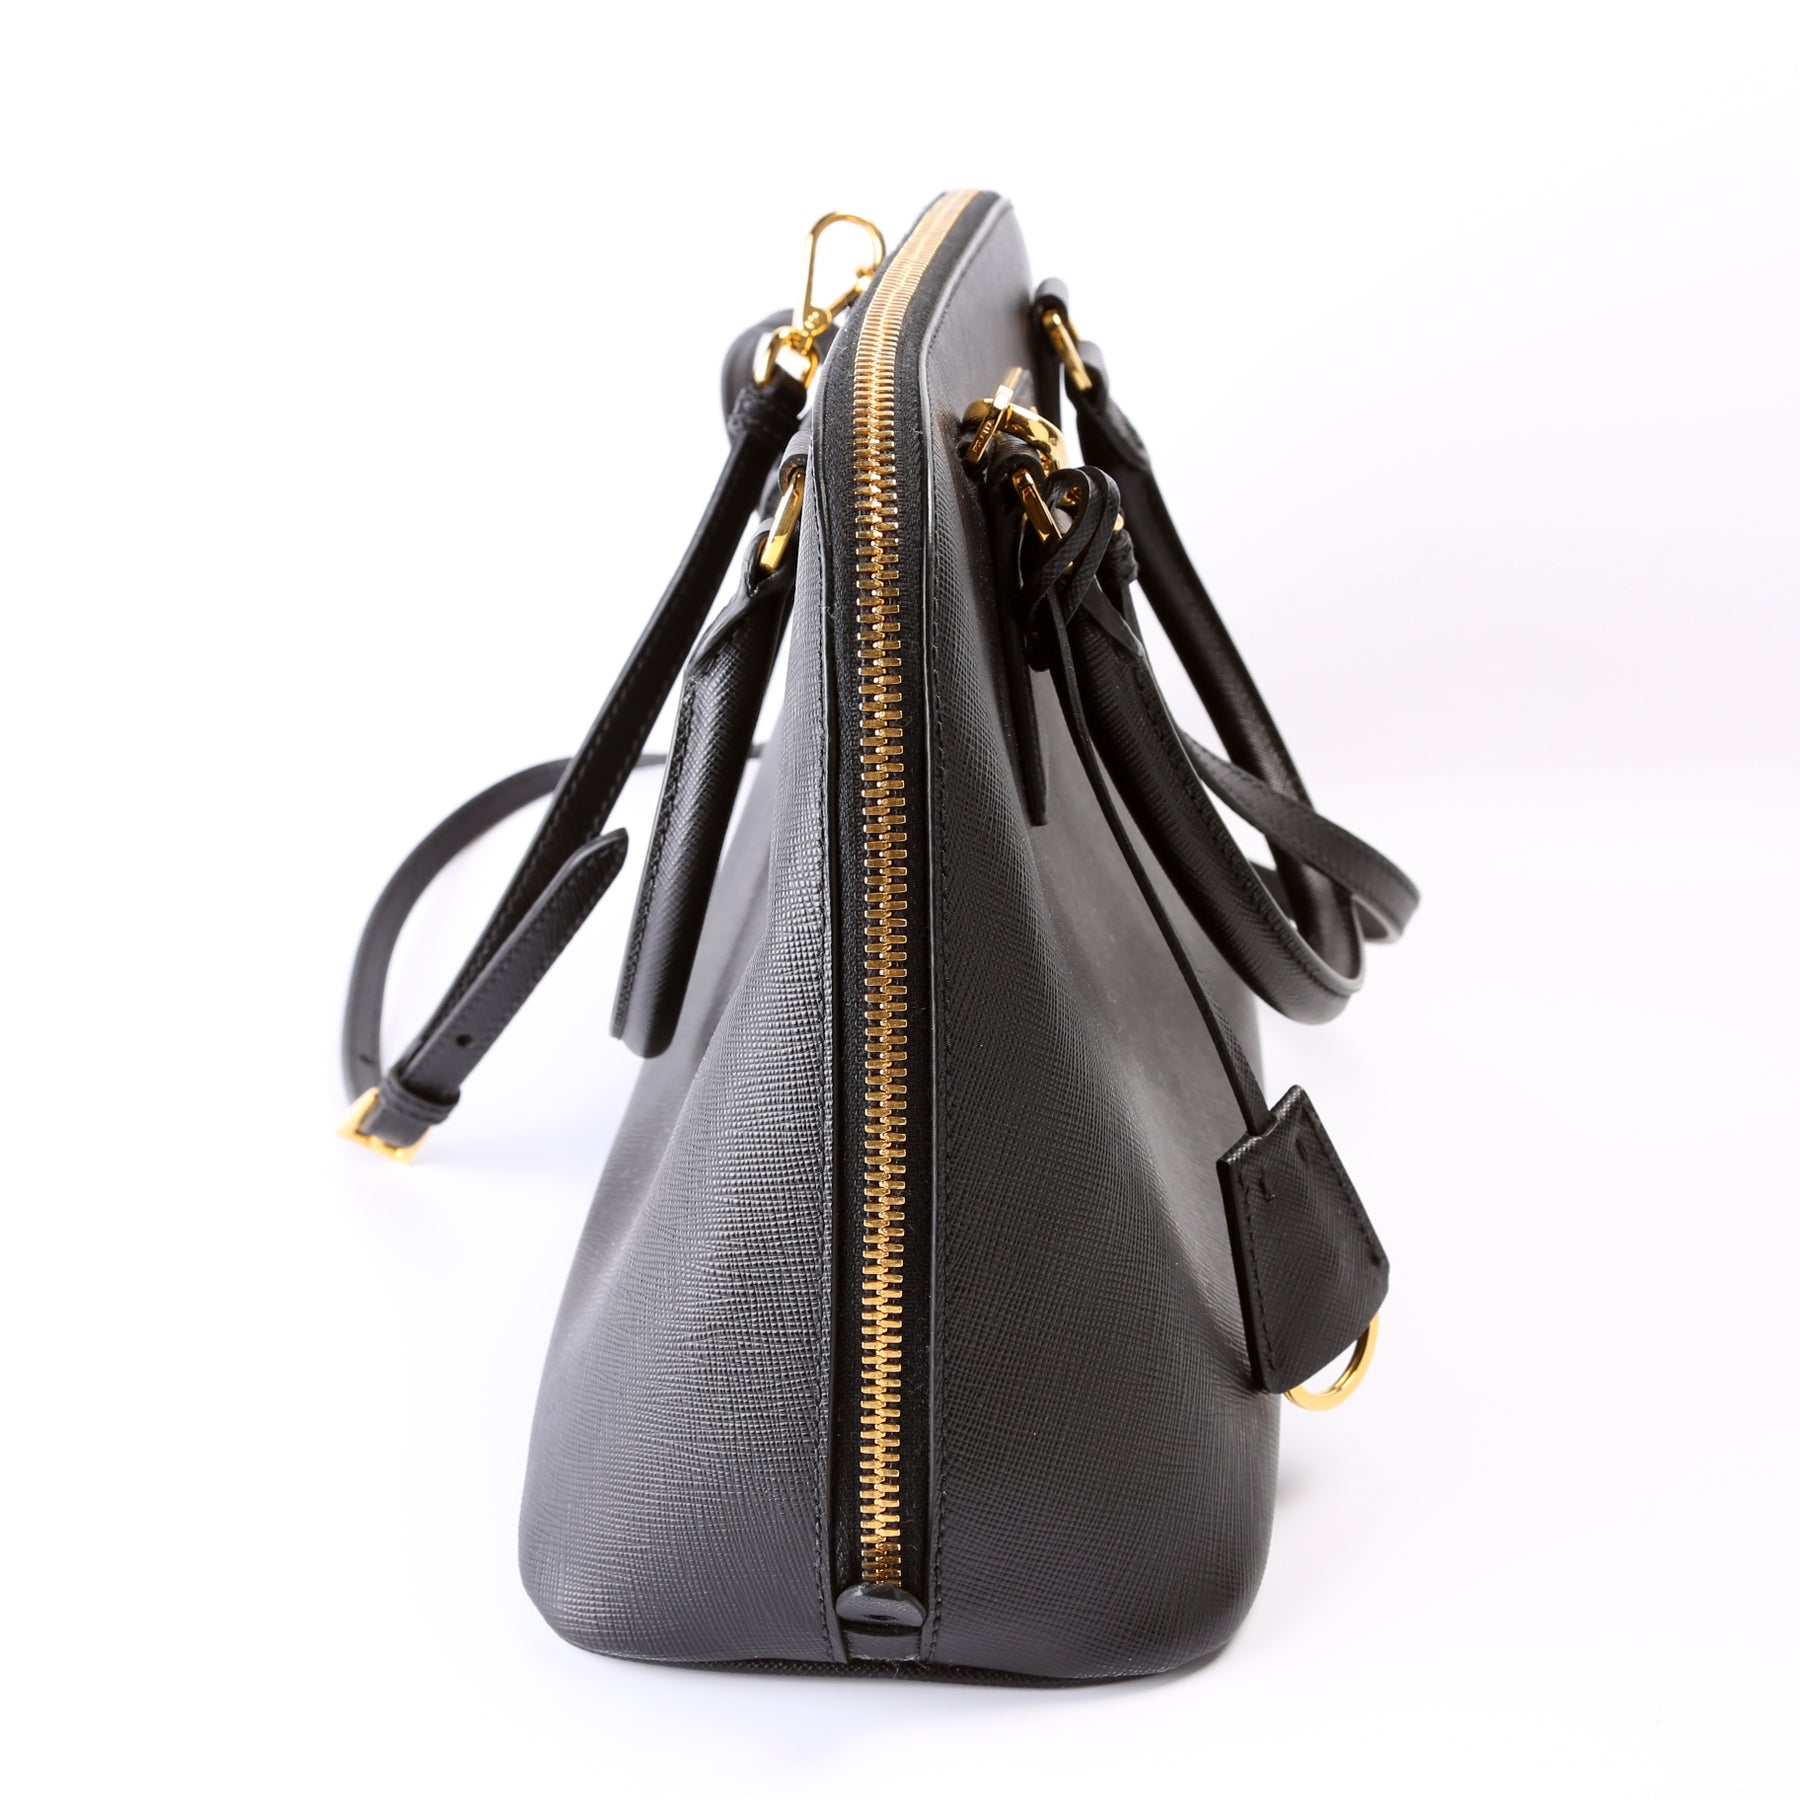 Lux Promenade Camme Medium Top Handle Bag in Saffiano Leather, Gold Ha